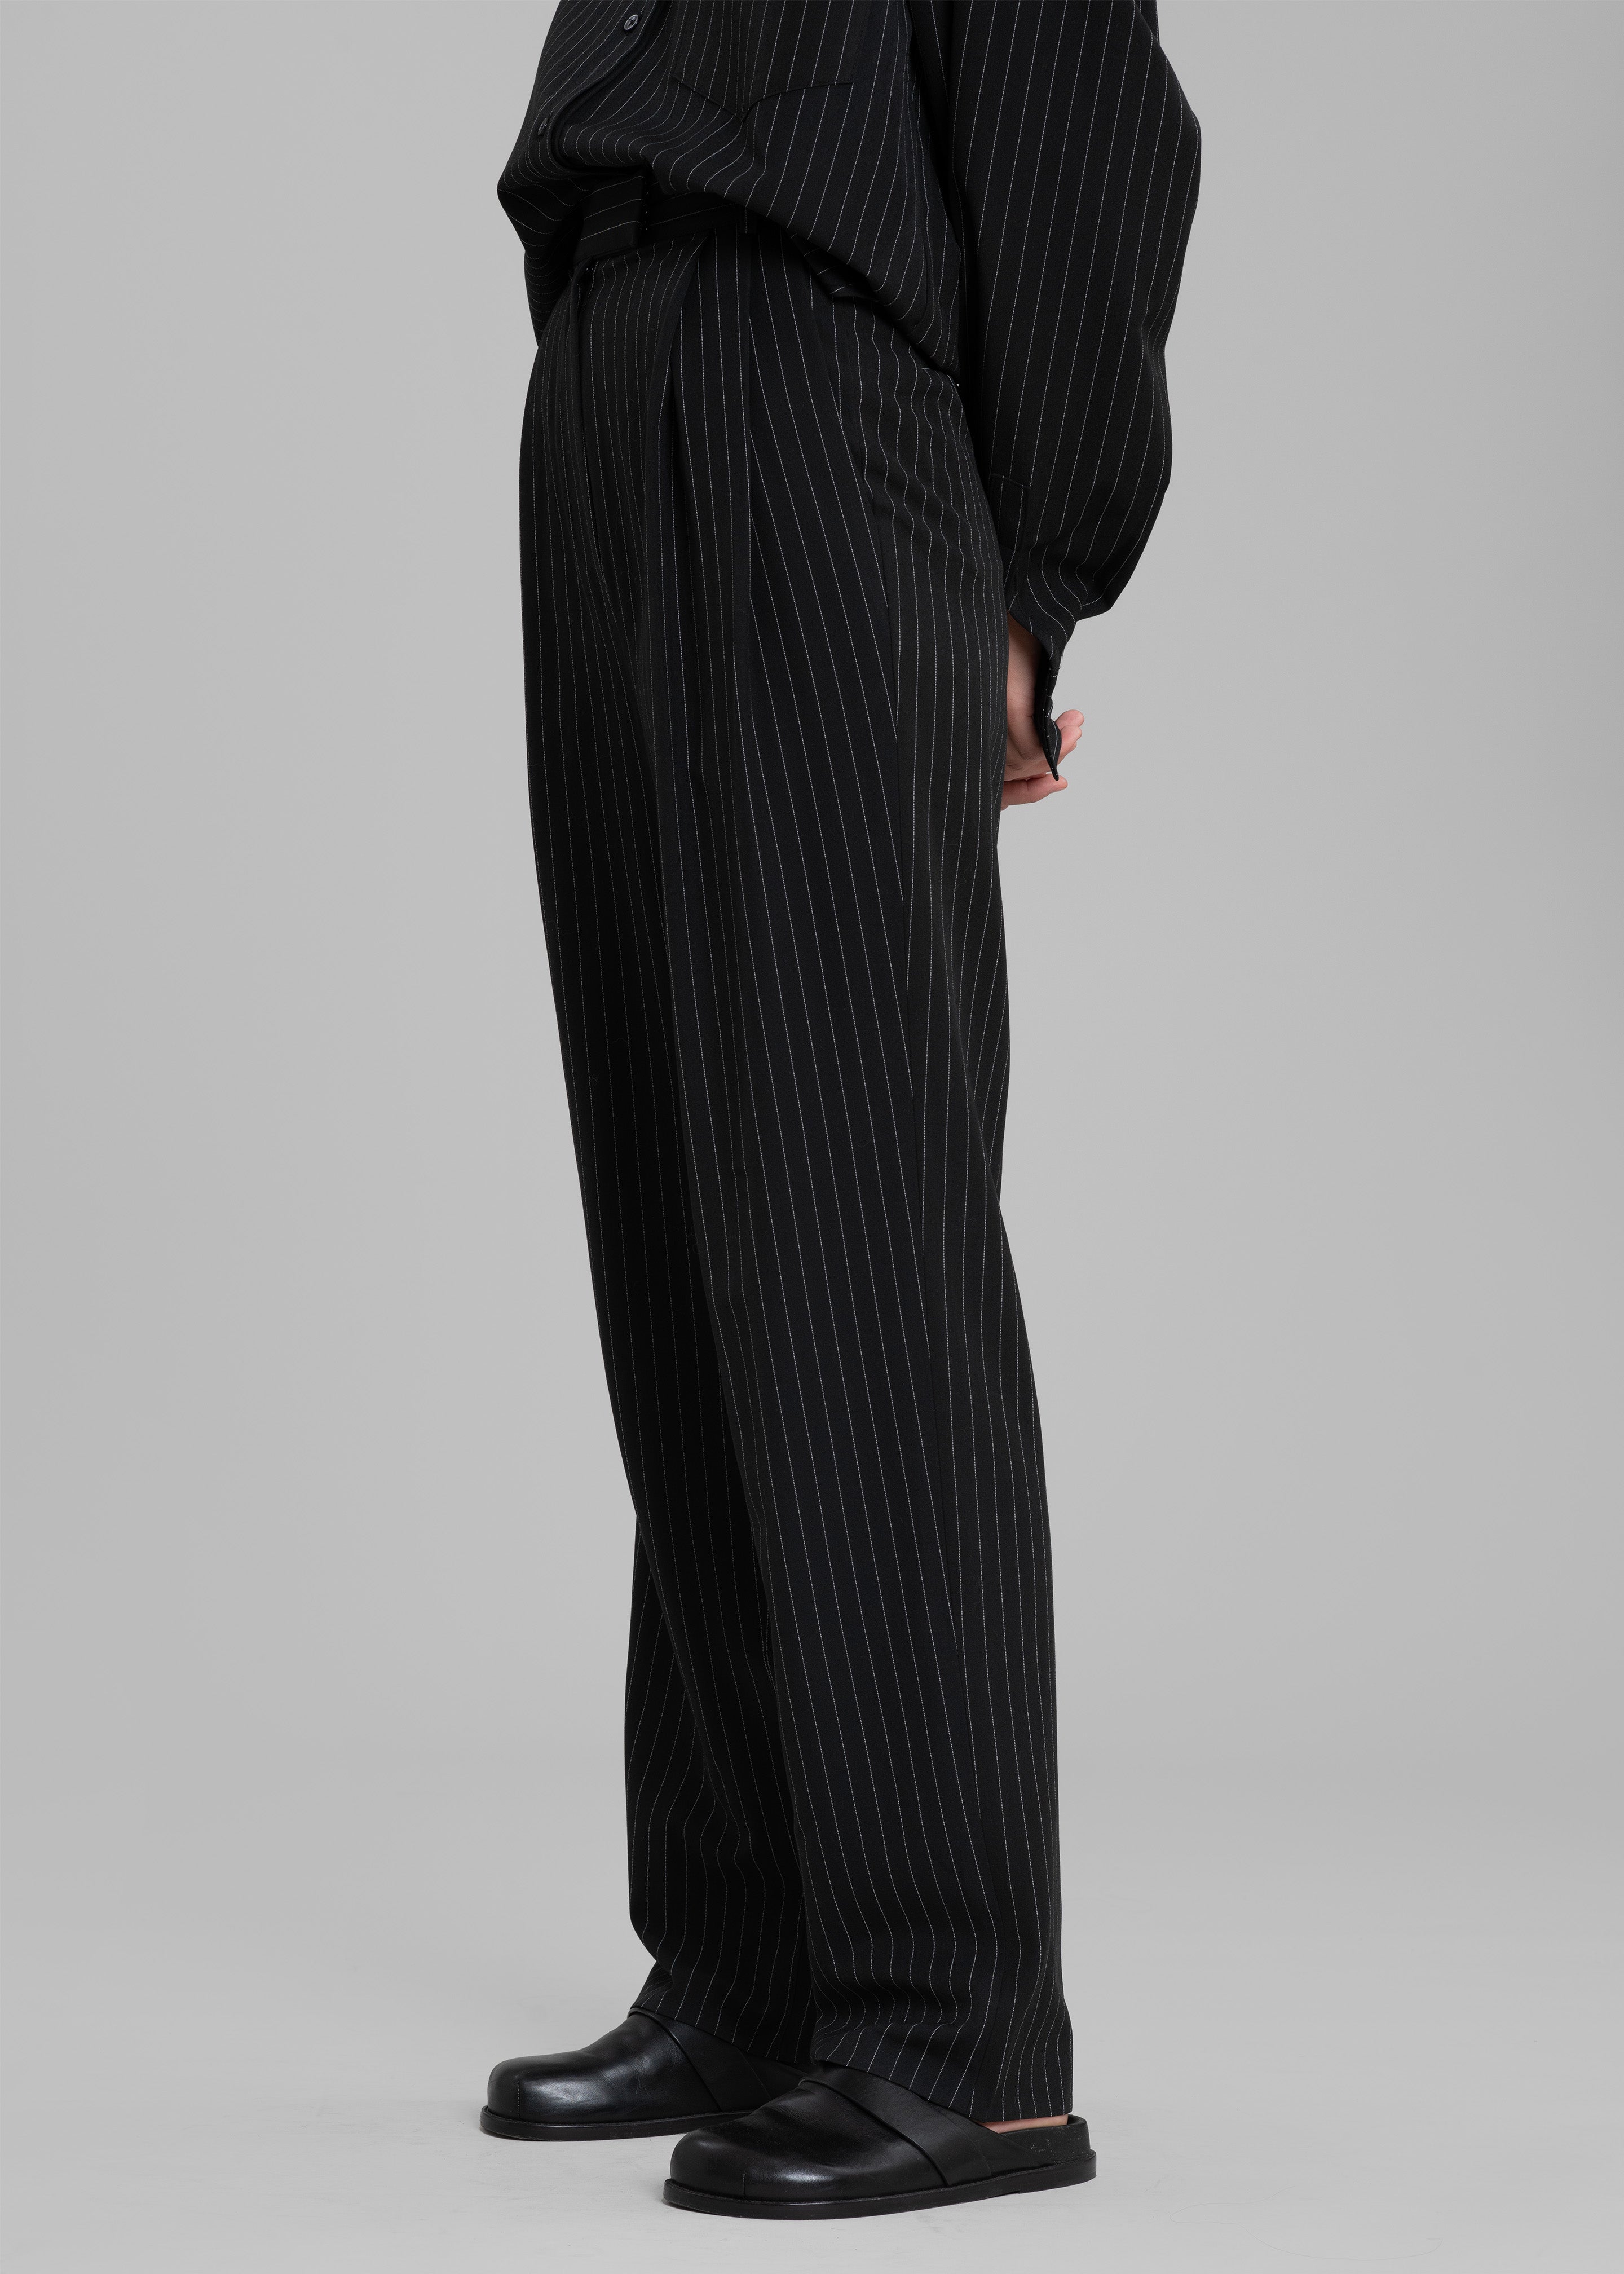 Dobell Black  Grey Striped Slim Fit Morning Suit Trousers  Dobell